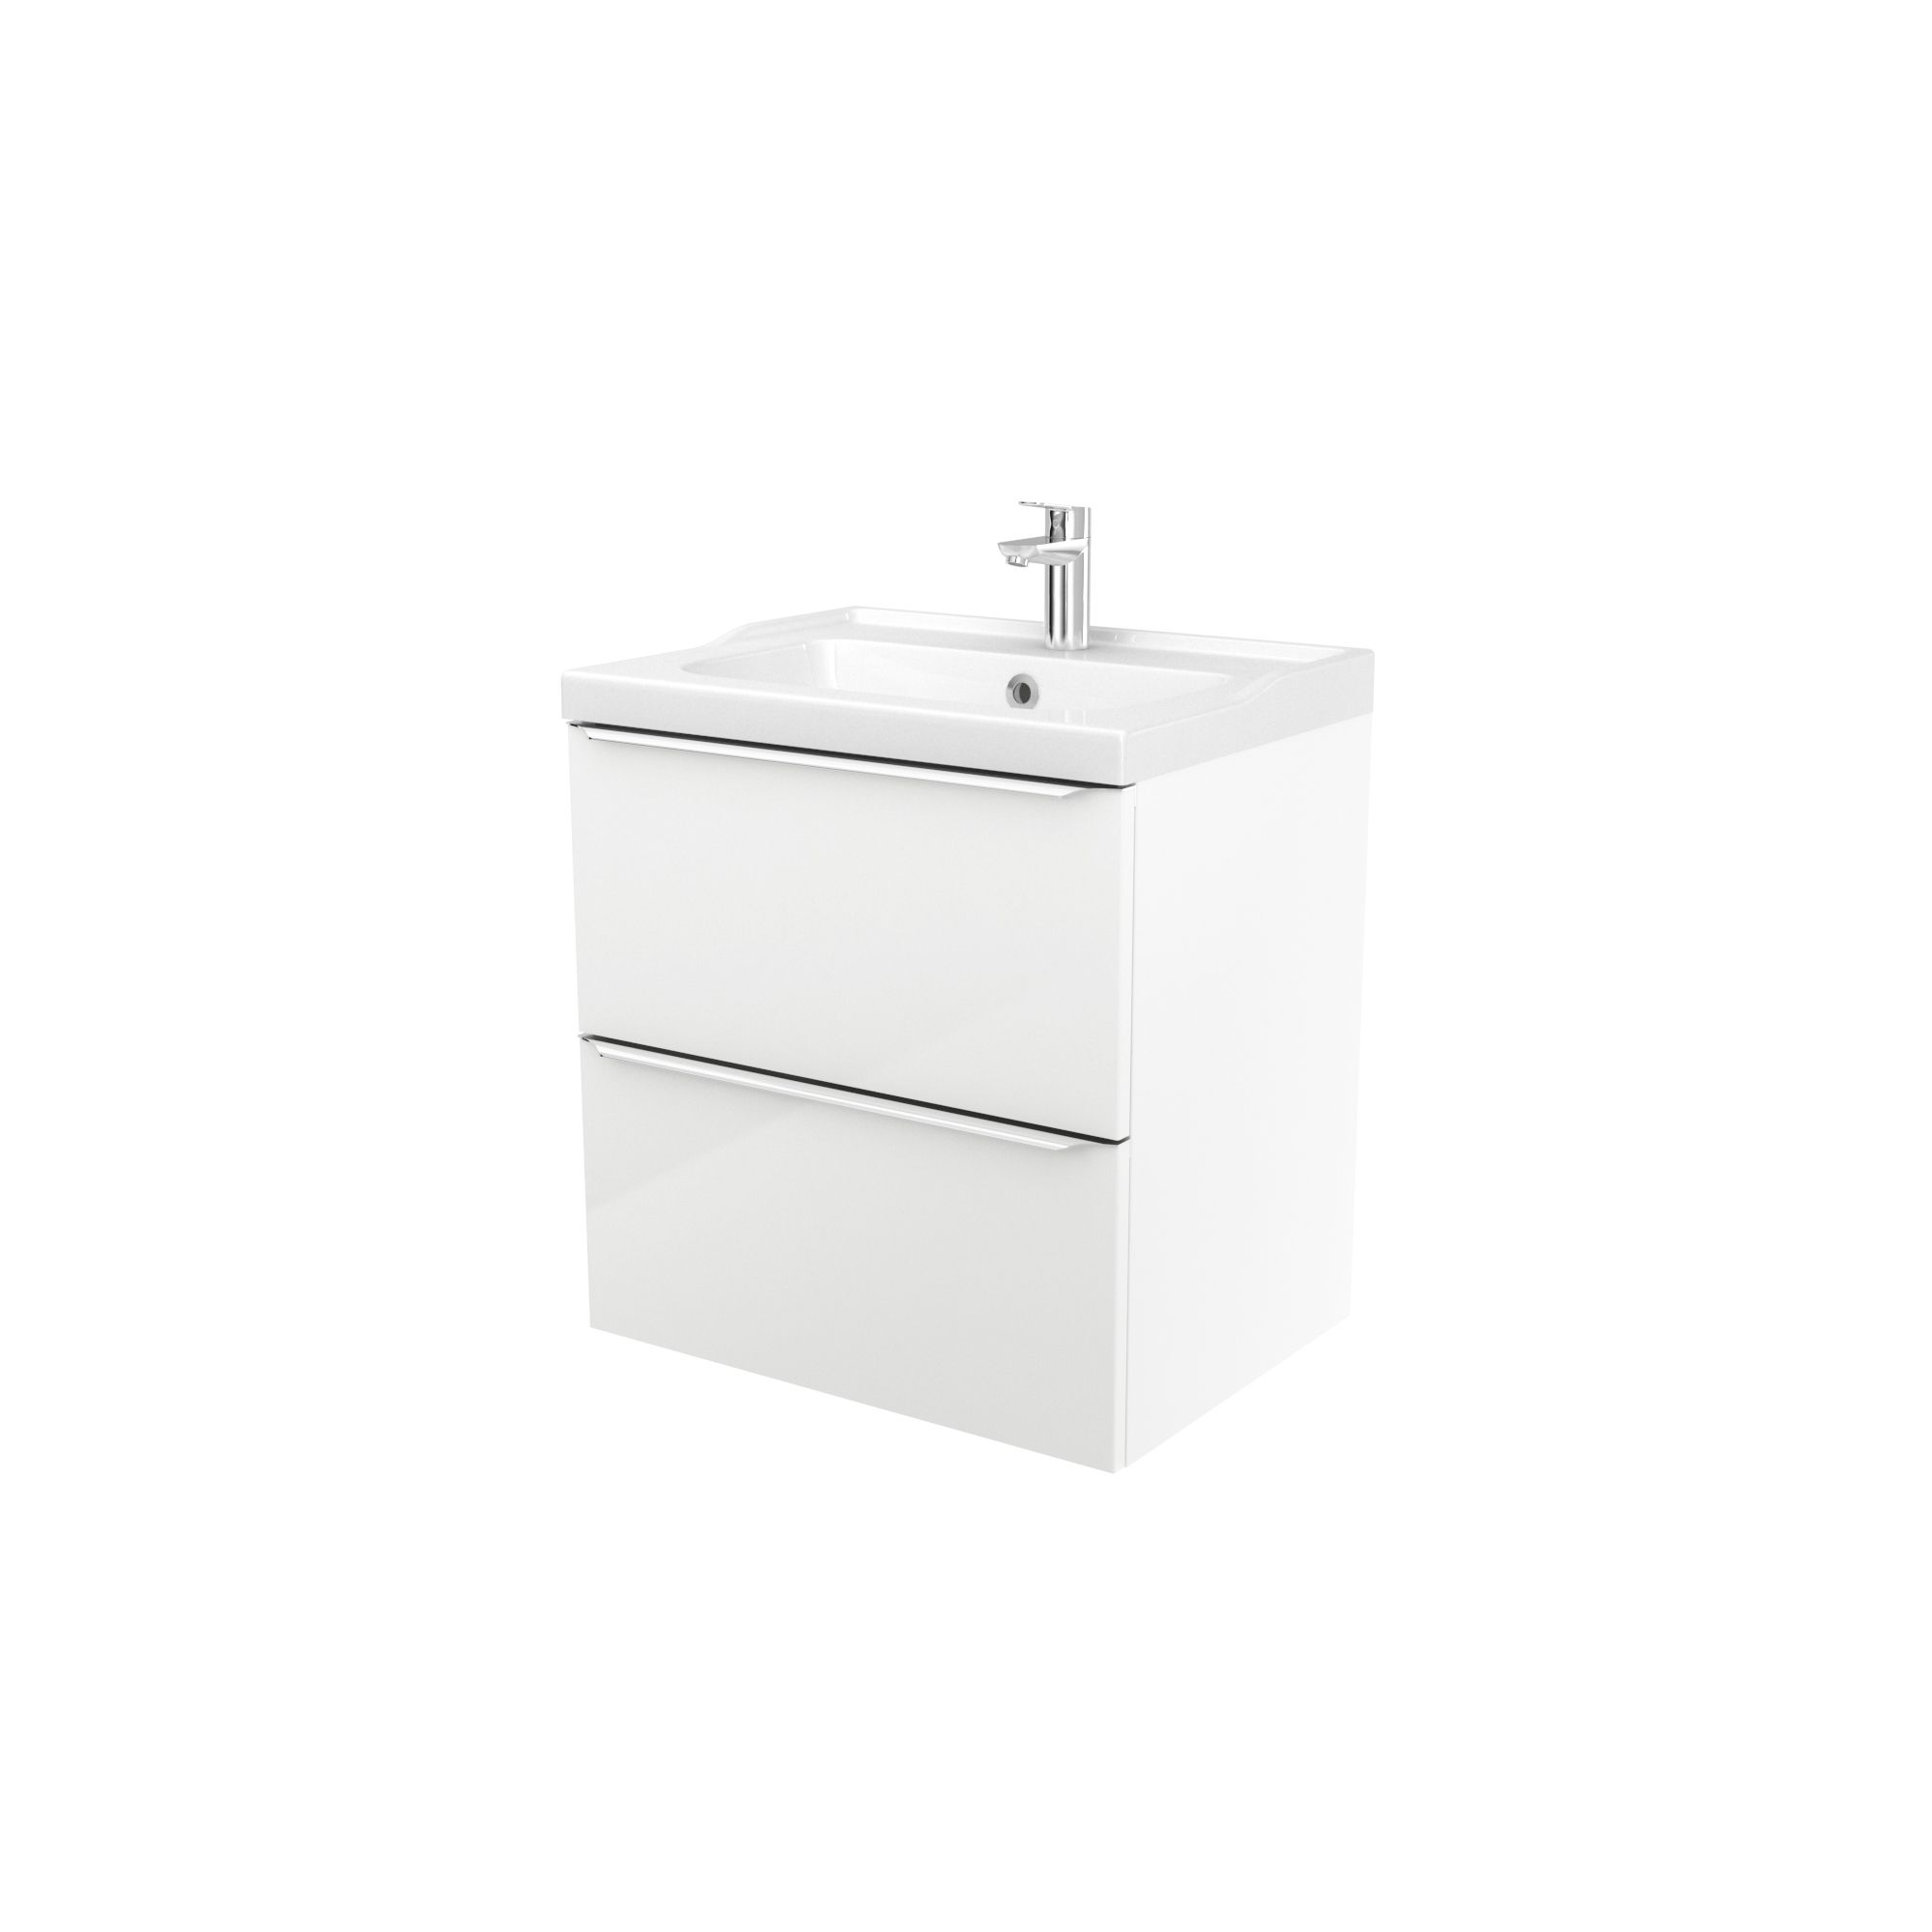 GoodHome Imandra White Wall-mounted Vanity unit & basin set - Includes Lana basin (W)604mm